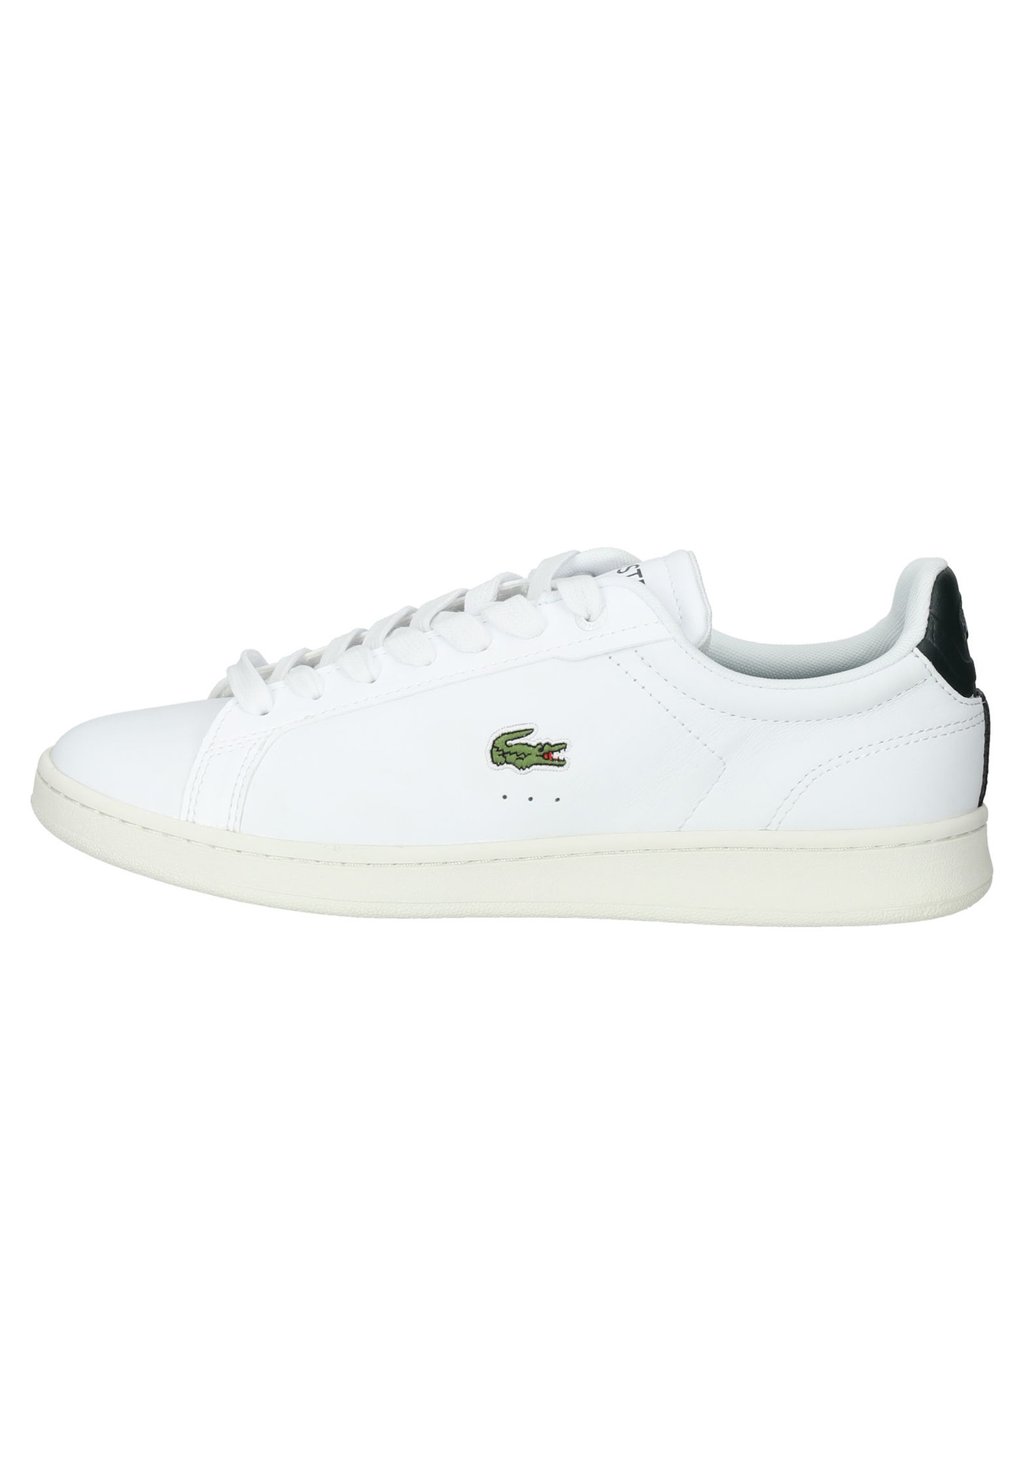 Кроссовки Lacoste Carnaby Pro 123 9 Sma, белый / темно-зеленый кроссовки linetrack 2231 sfa wht grn lacoste белый